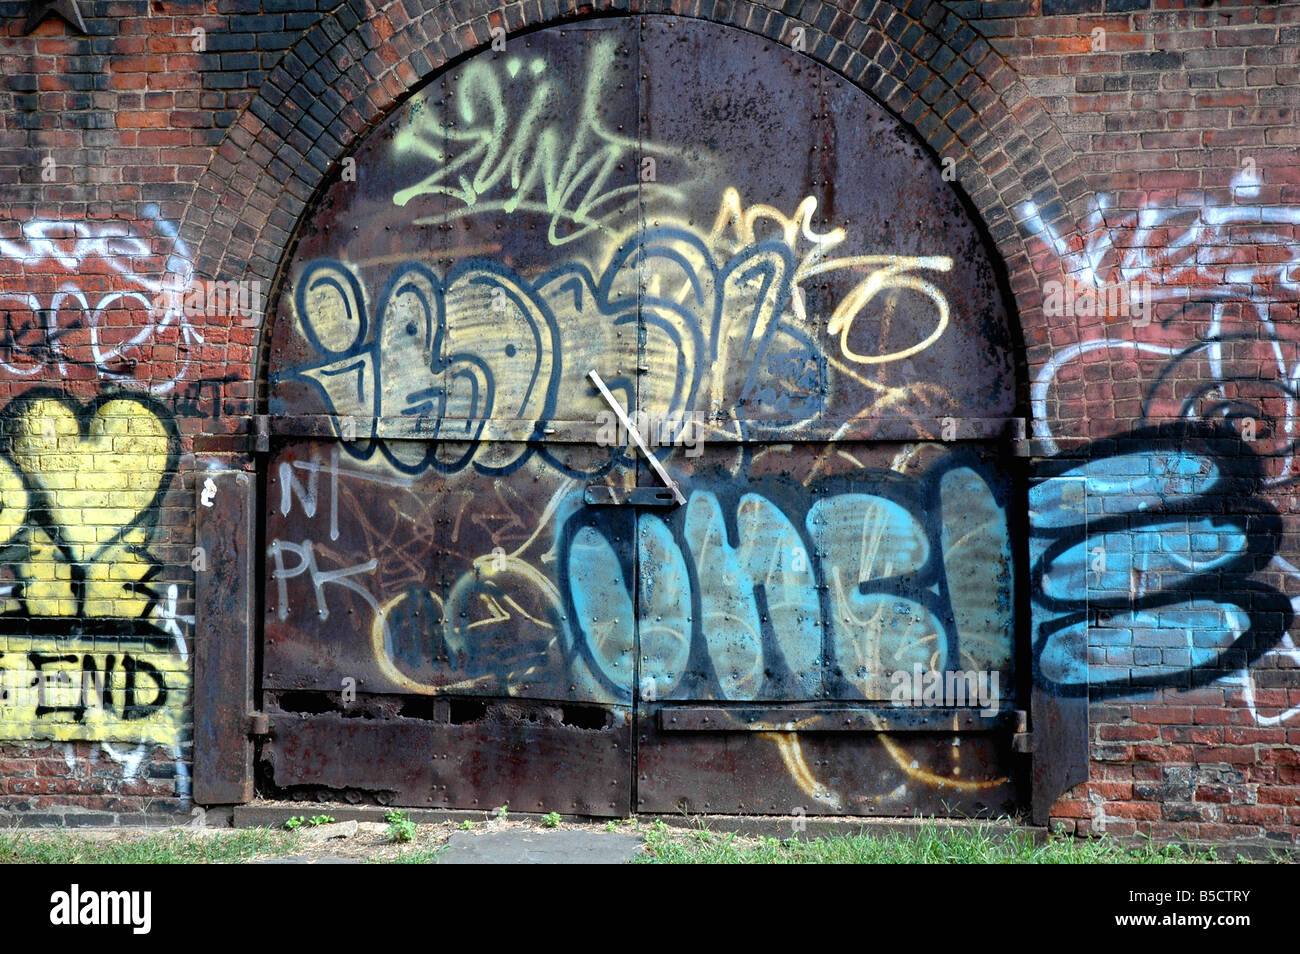 graffiti on metal doors and brick walls in dumbo brooklyn new york Stock Photo